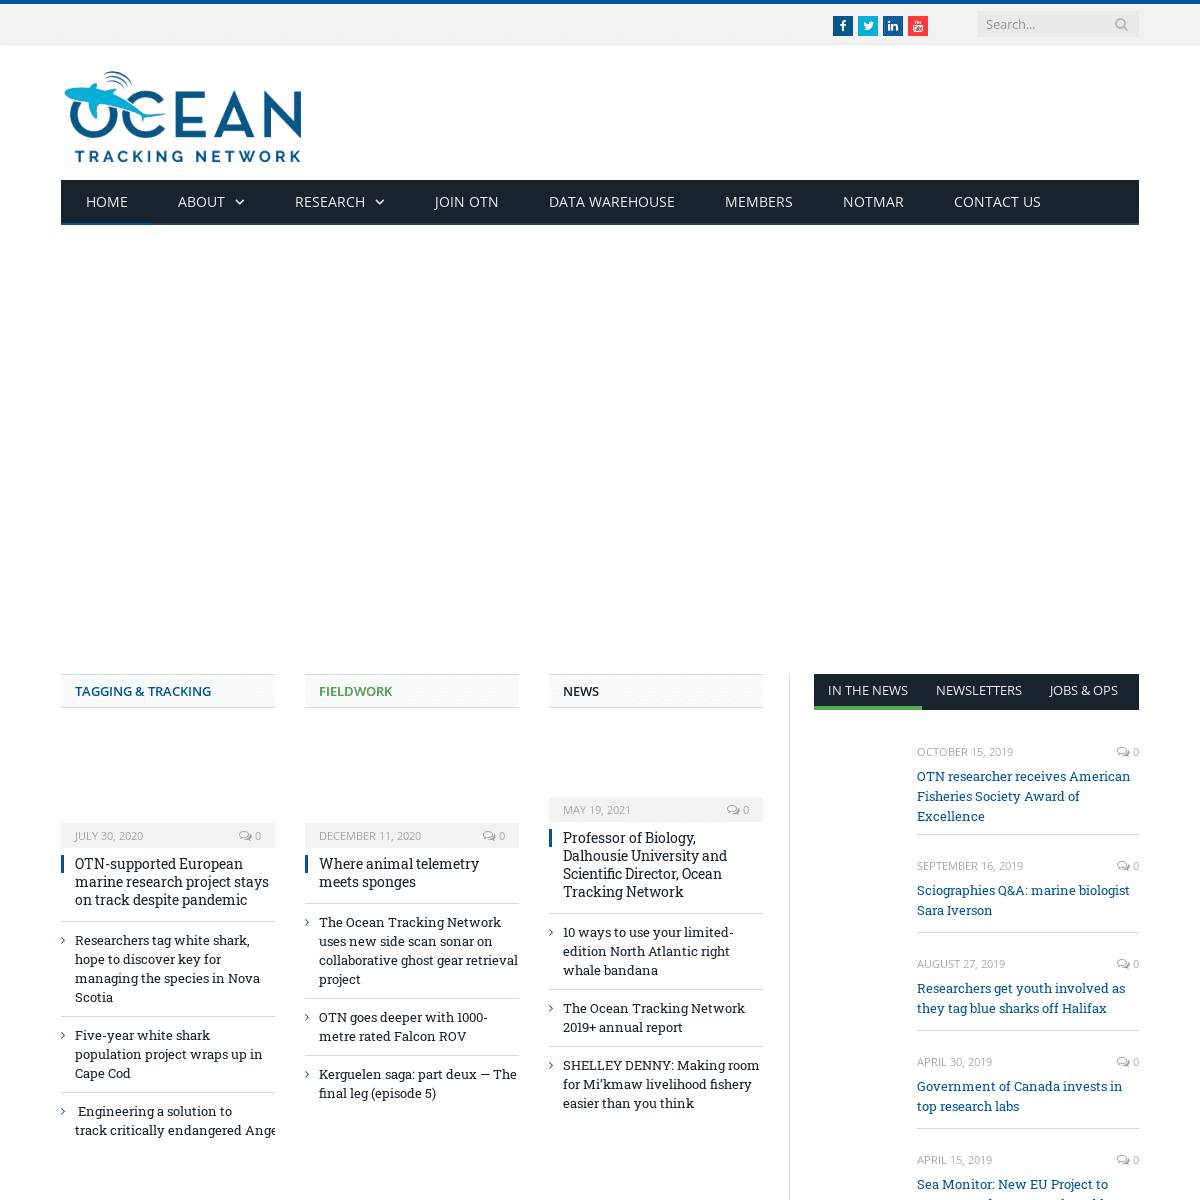 A complete backup of https://oceantrackingnetwork.org